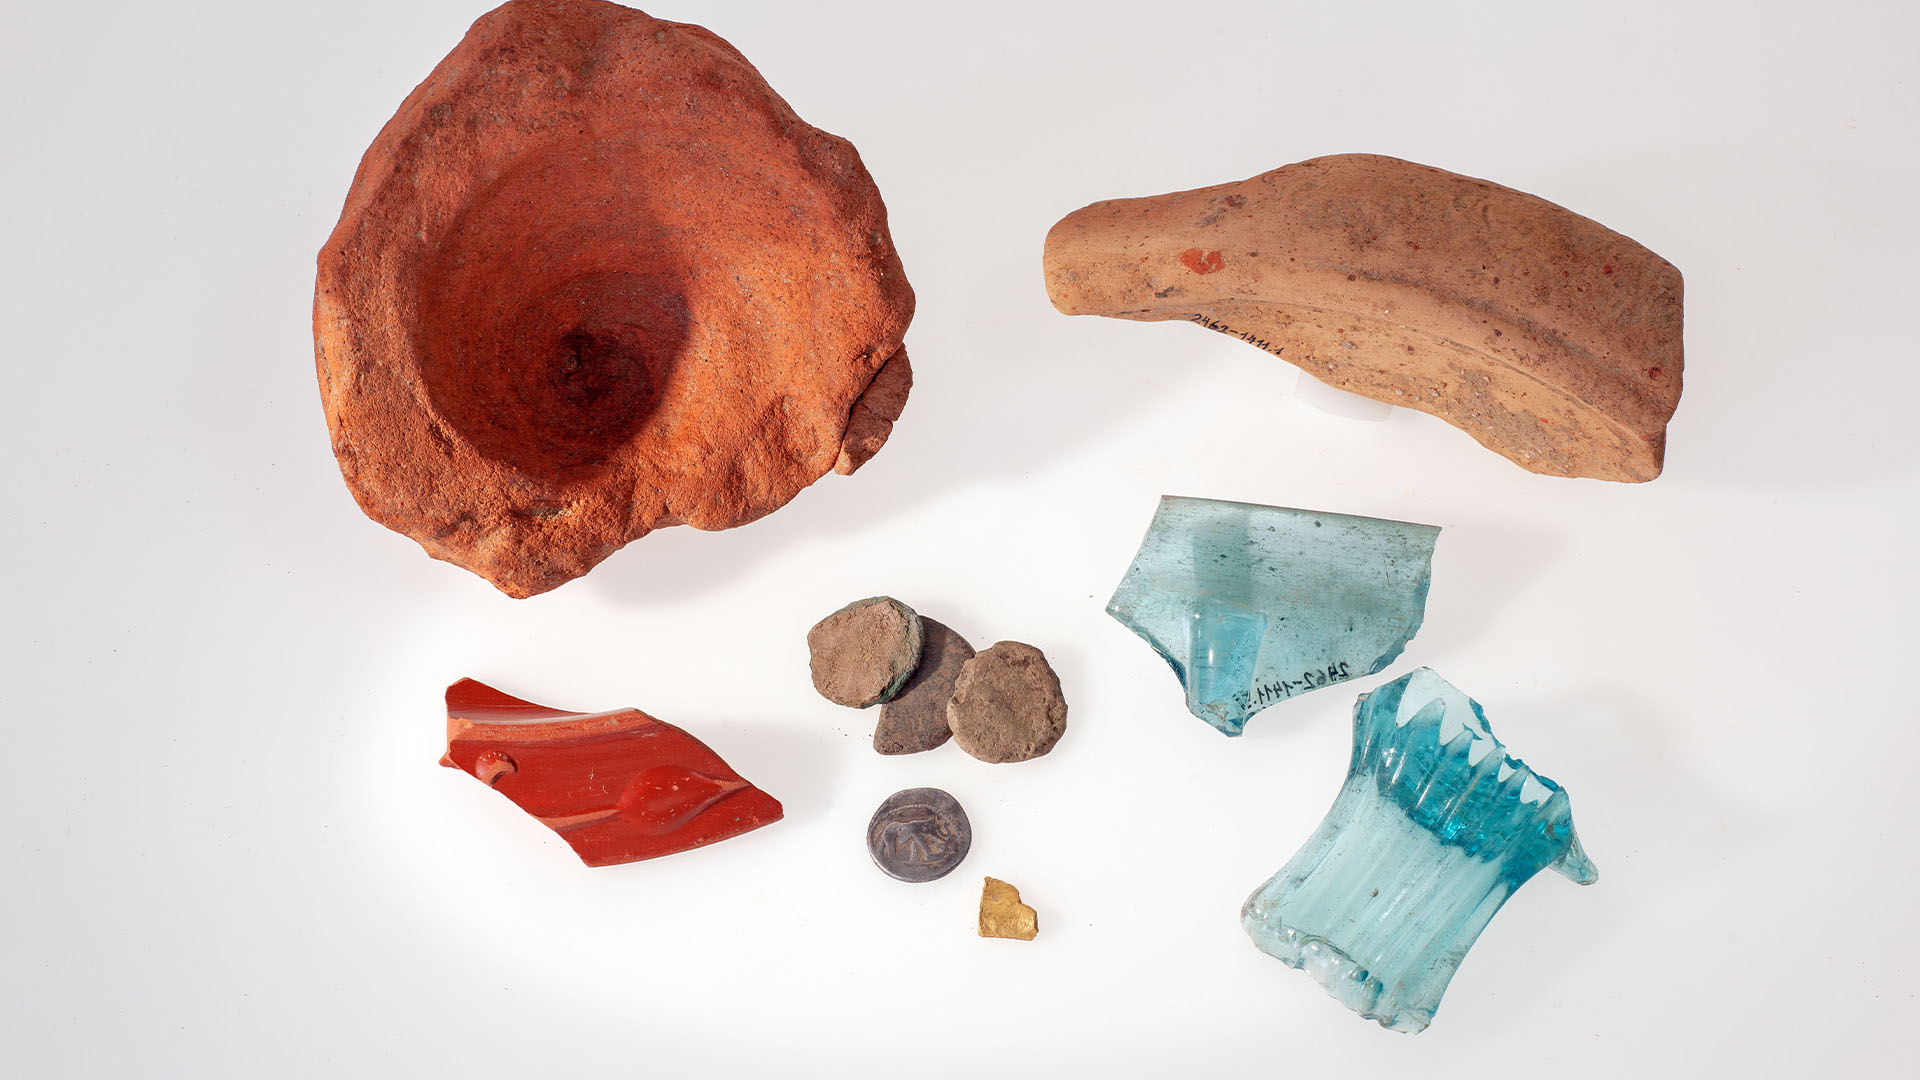 Alas amphora, potongan lesung, tepi mangkuk, empat koin, sebuah benda emas, potongan botol, dan mangkuk kaca biru.